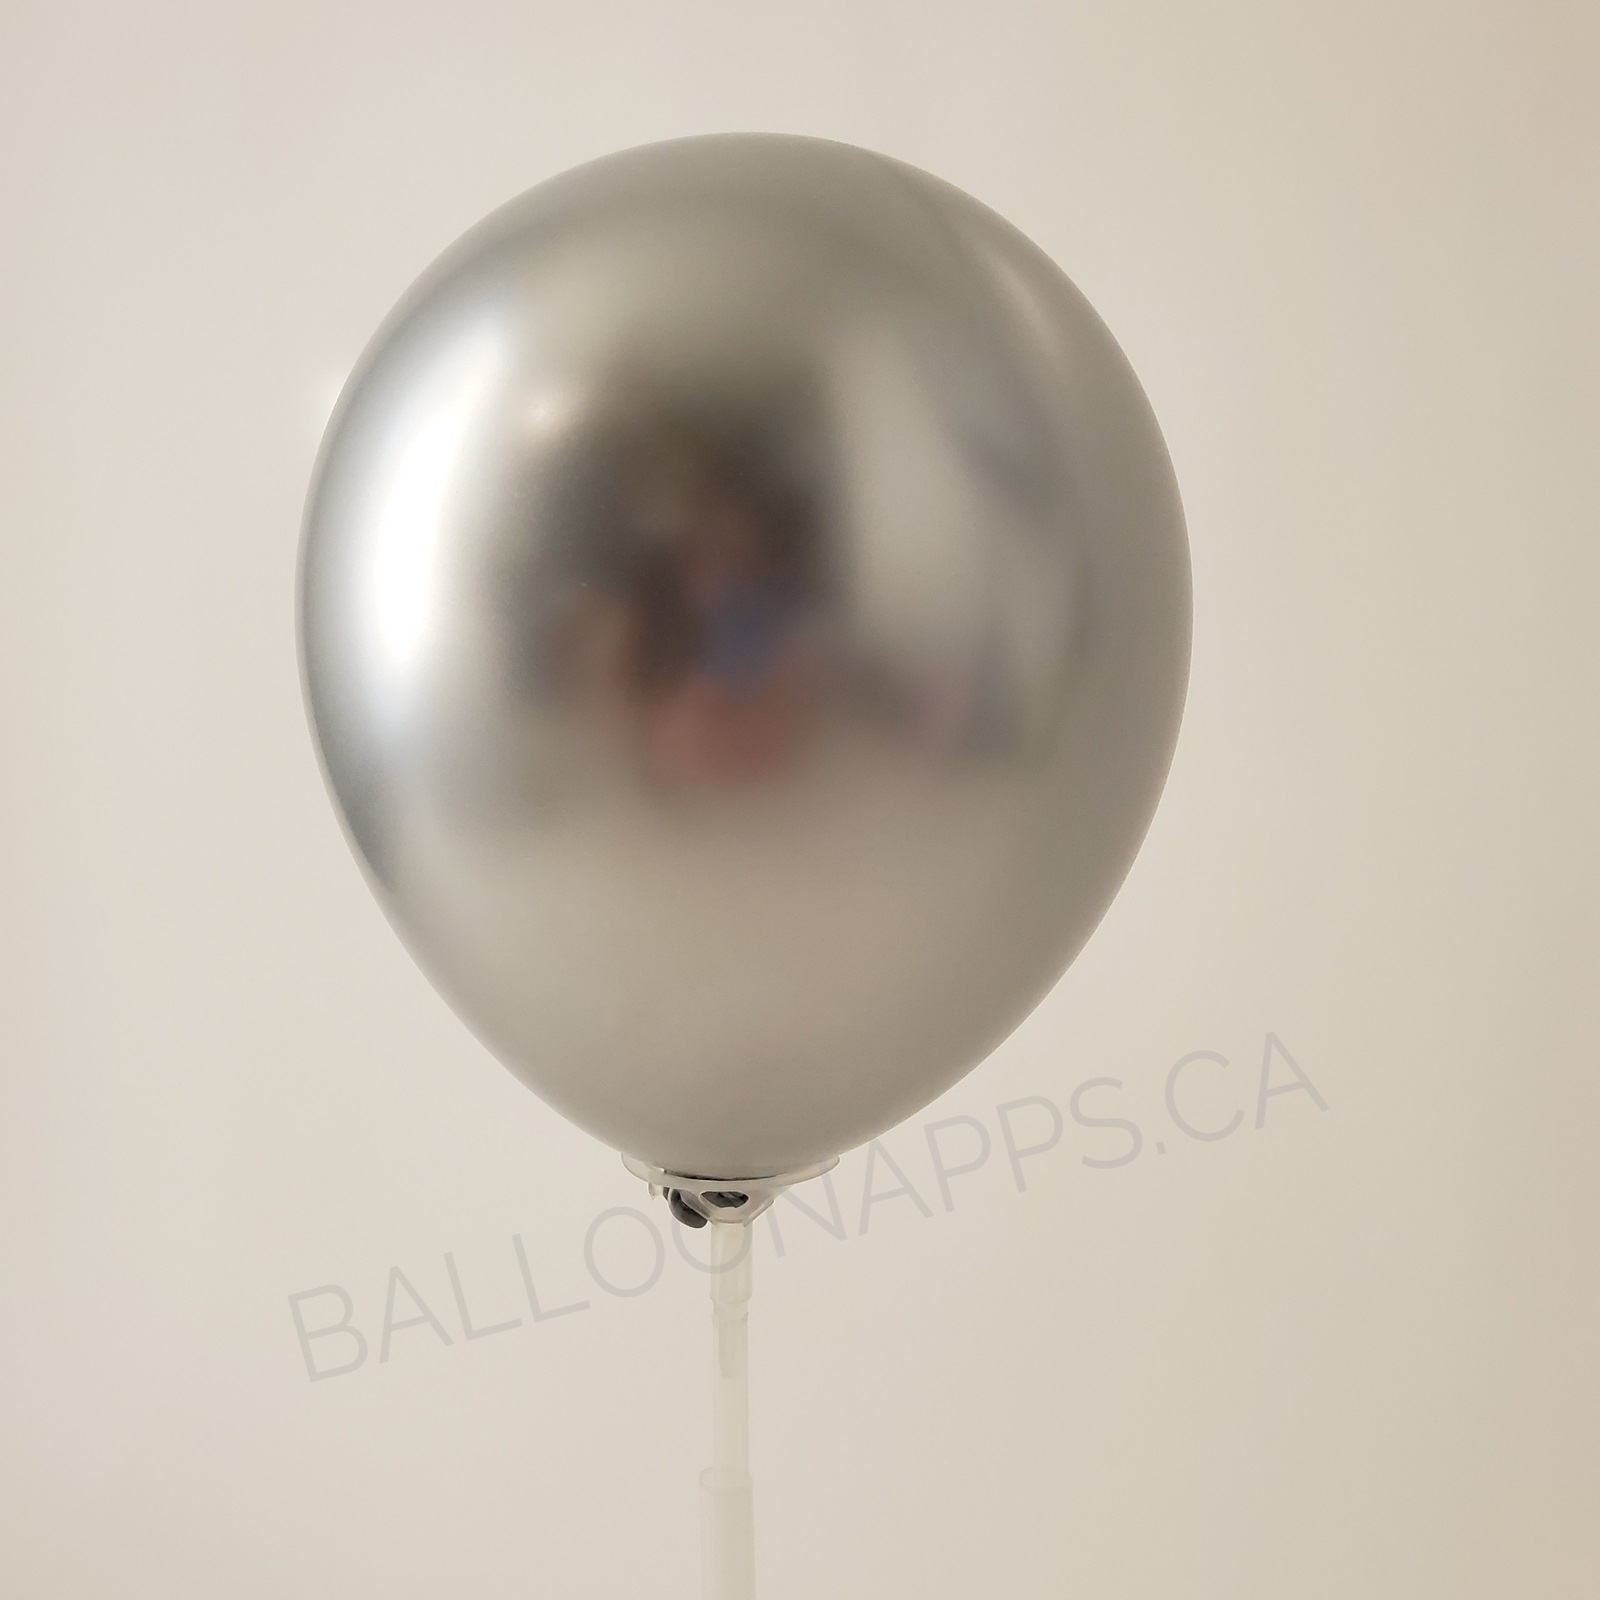 balloon texture Q (100) 260 Chrome Silver balloons